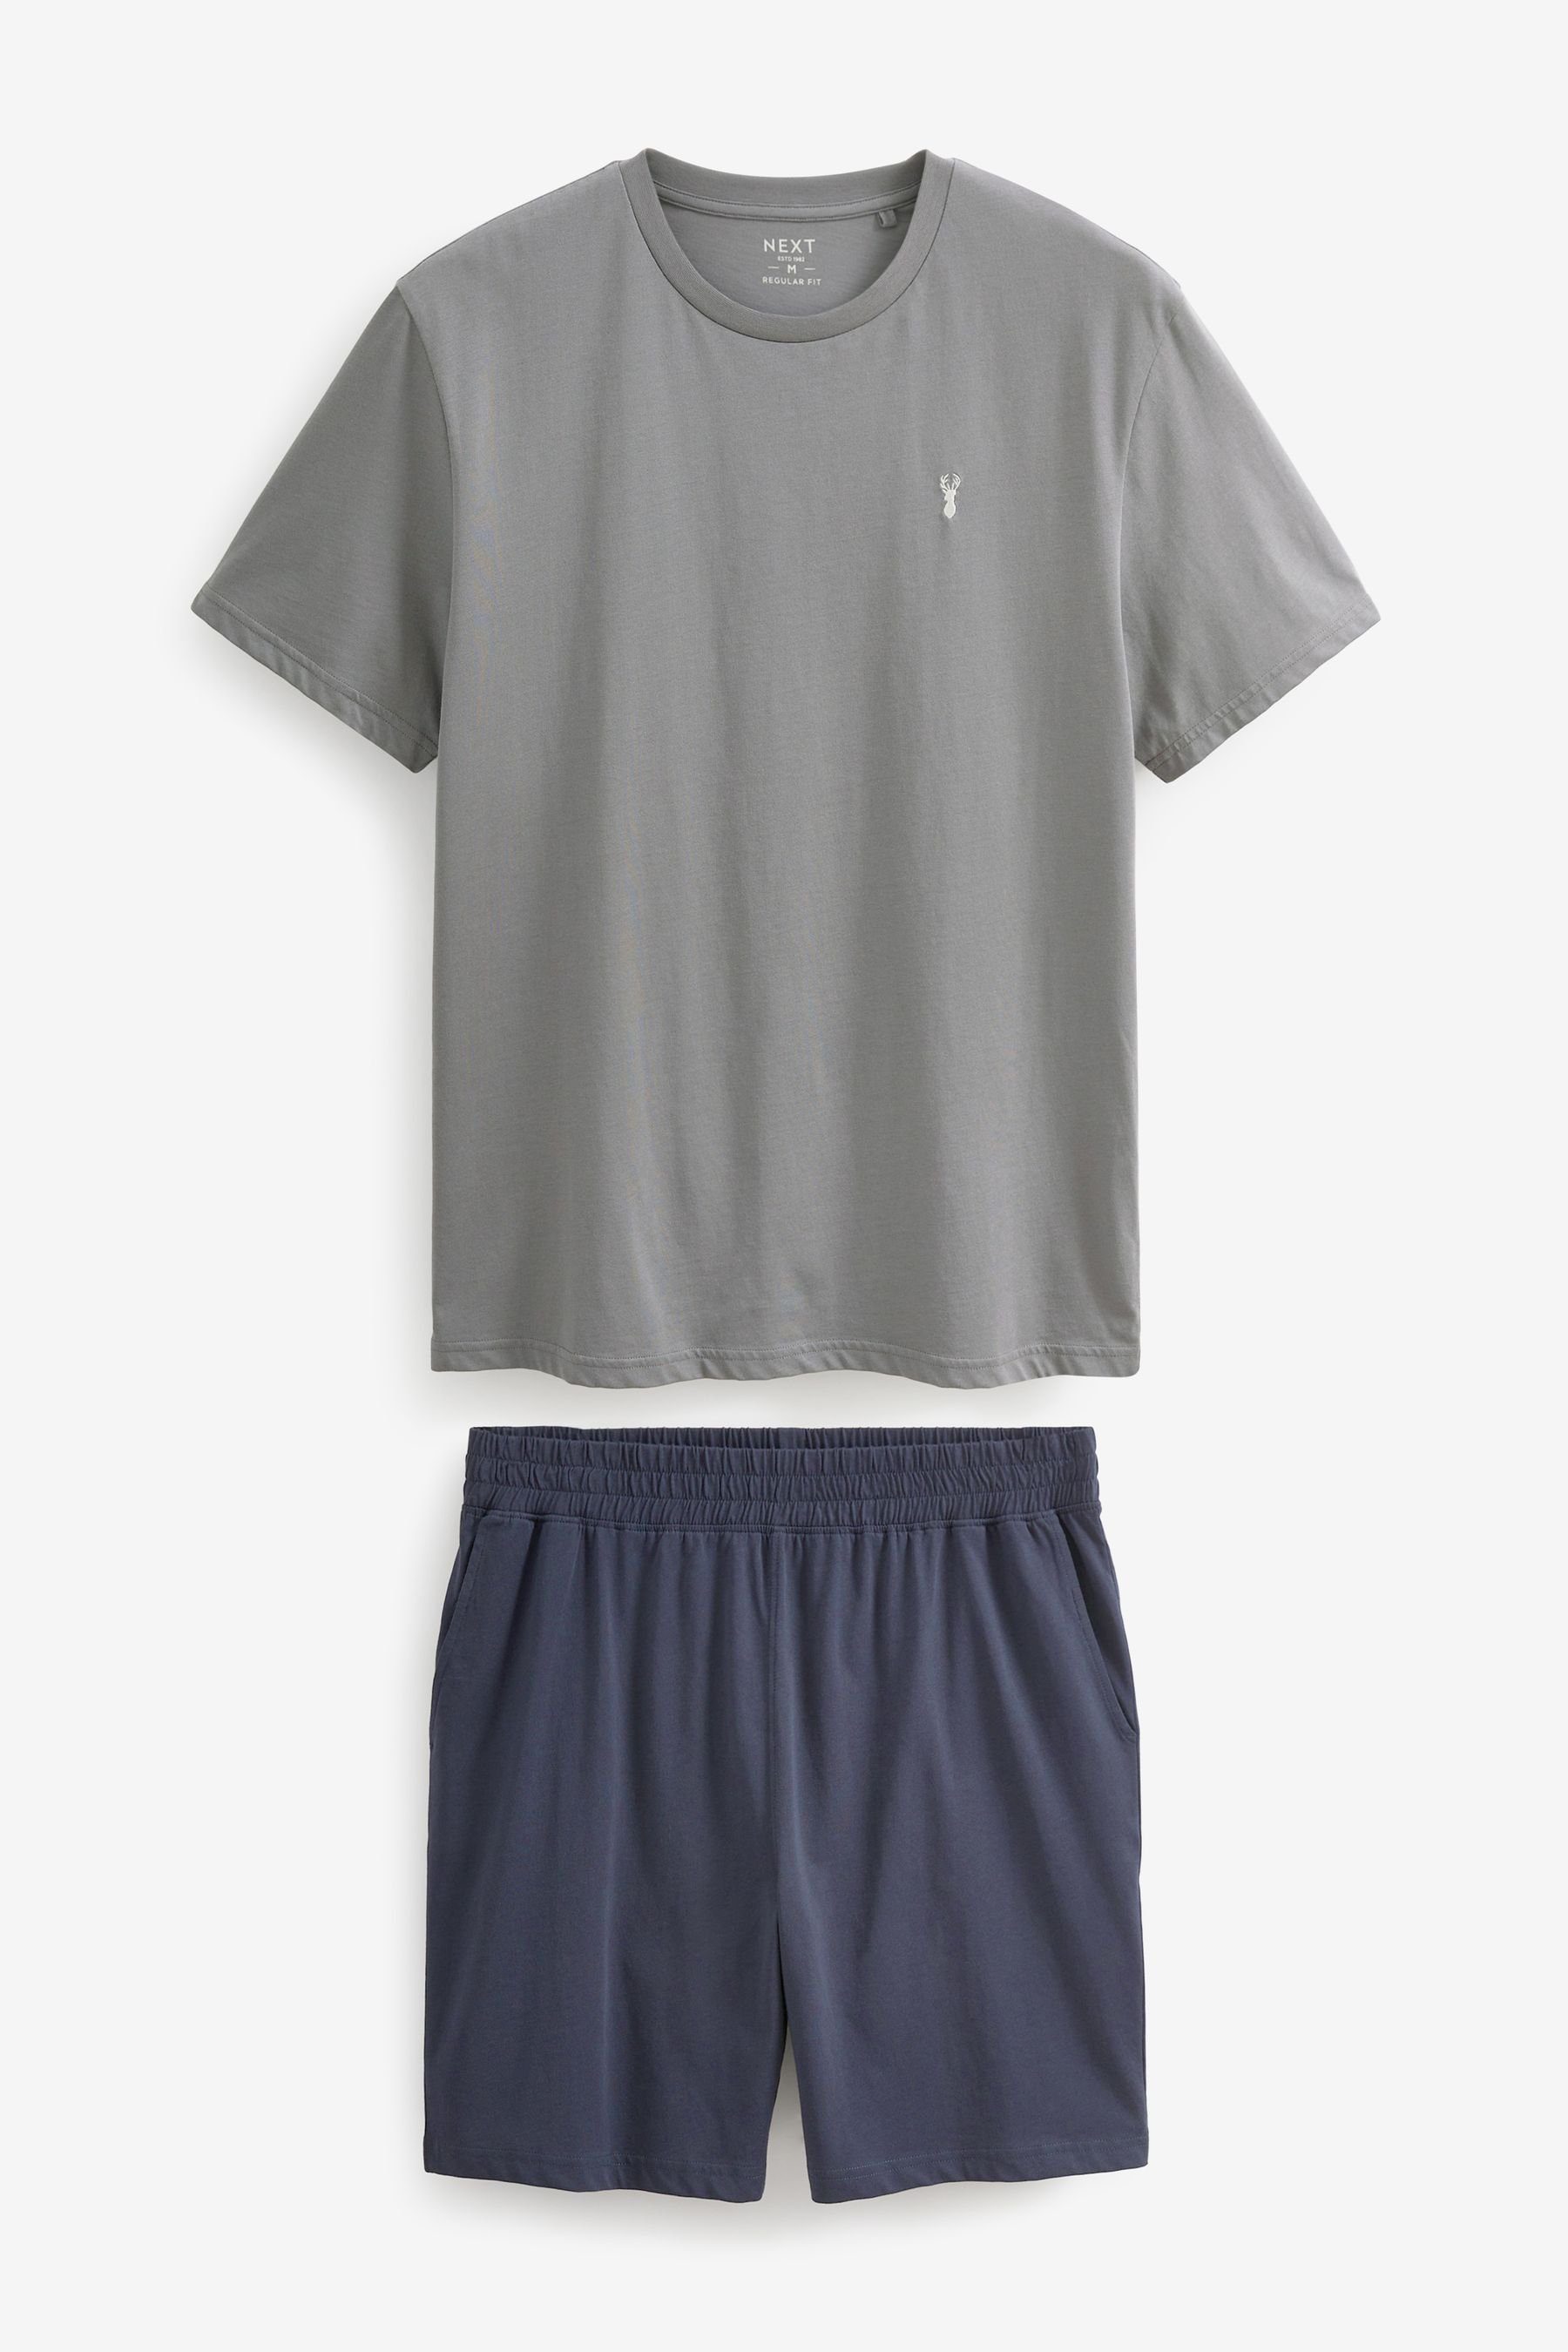 mit tlg) Shorts Next Grey/Black Pyjama Slate (2 Jersey-Schlafanzug